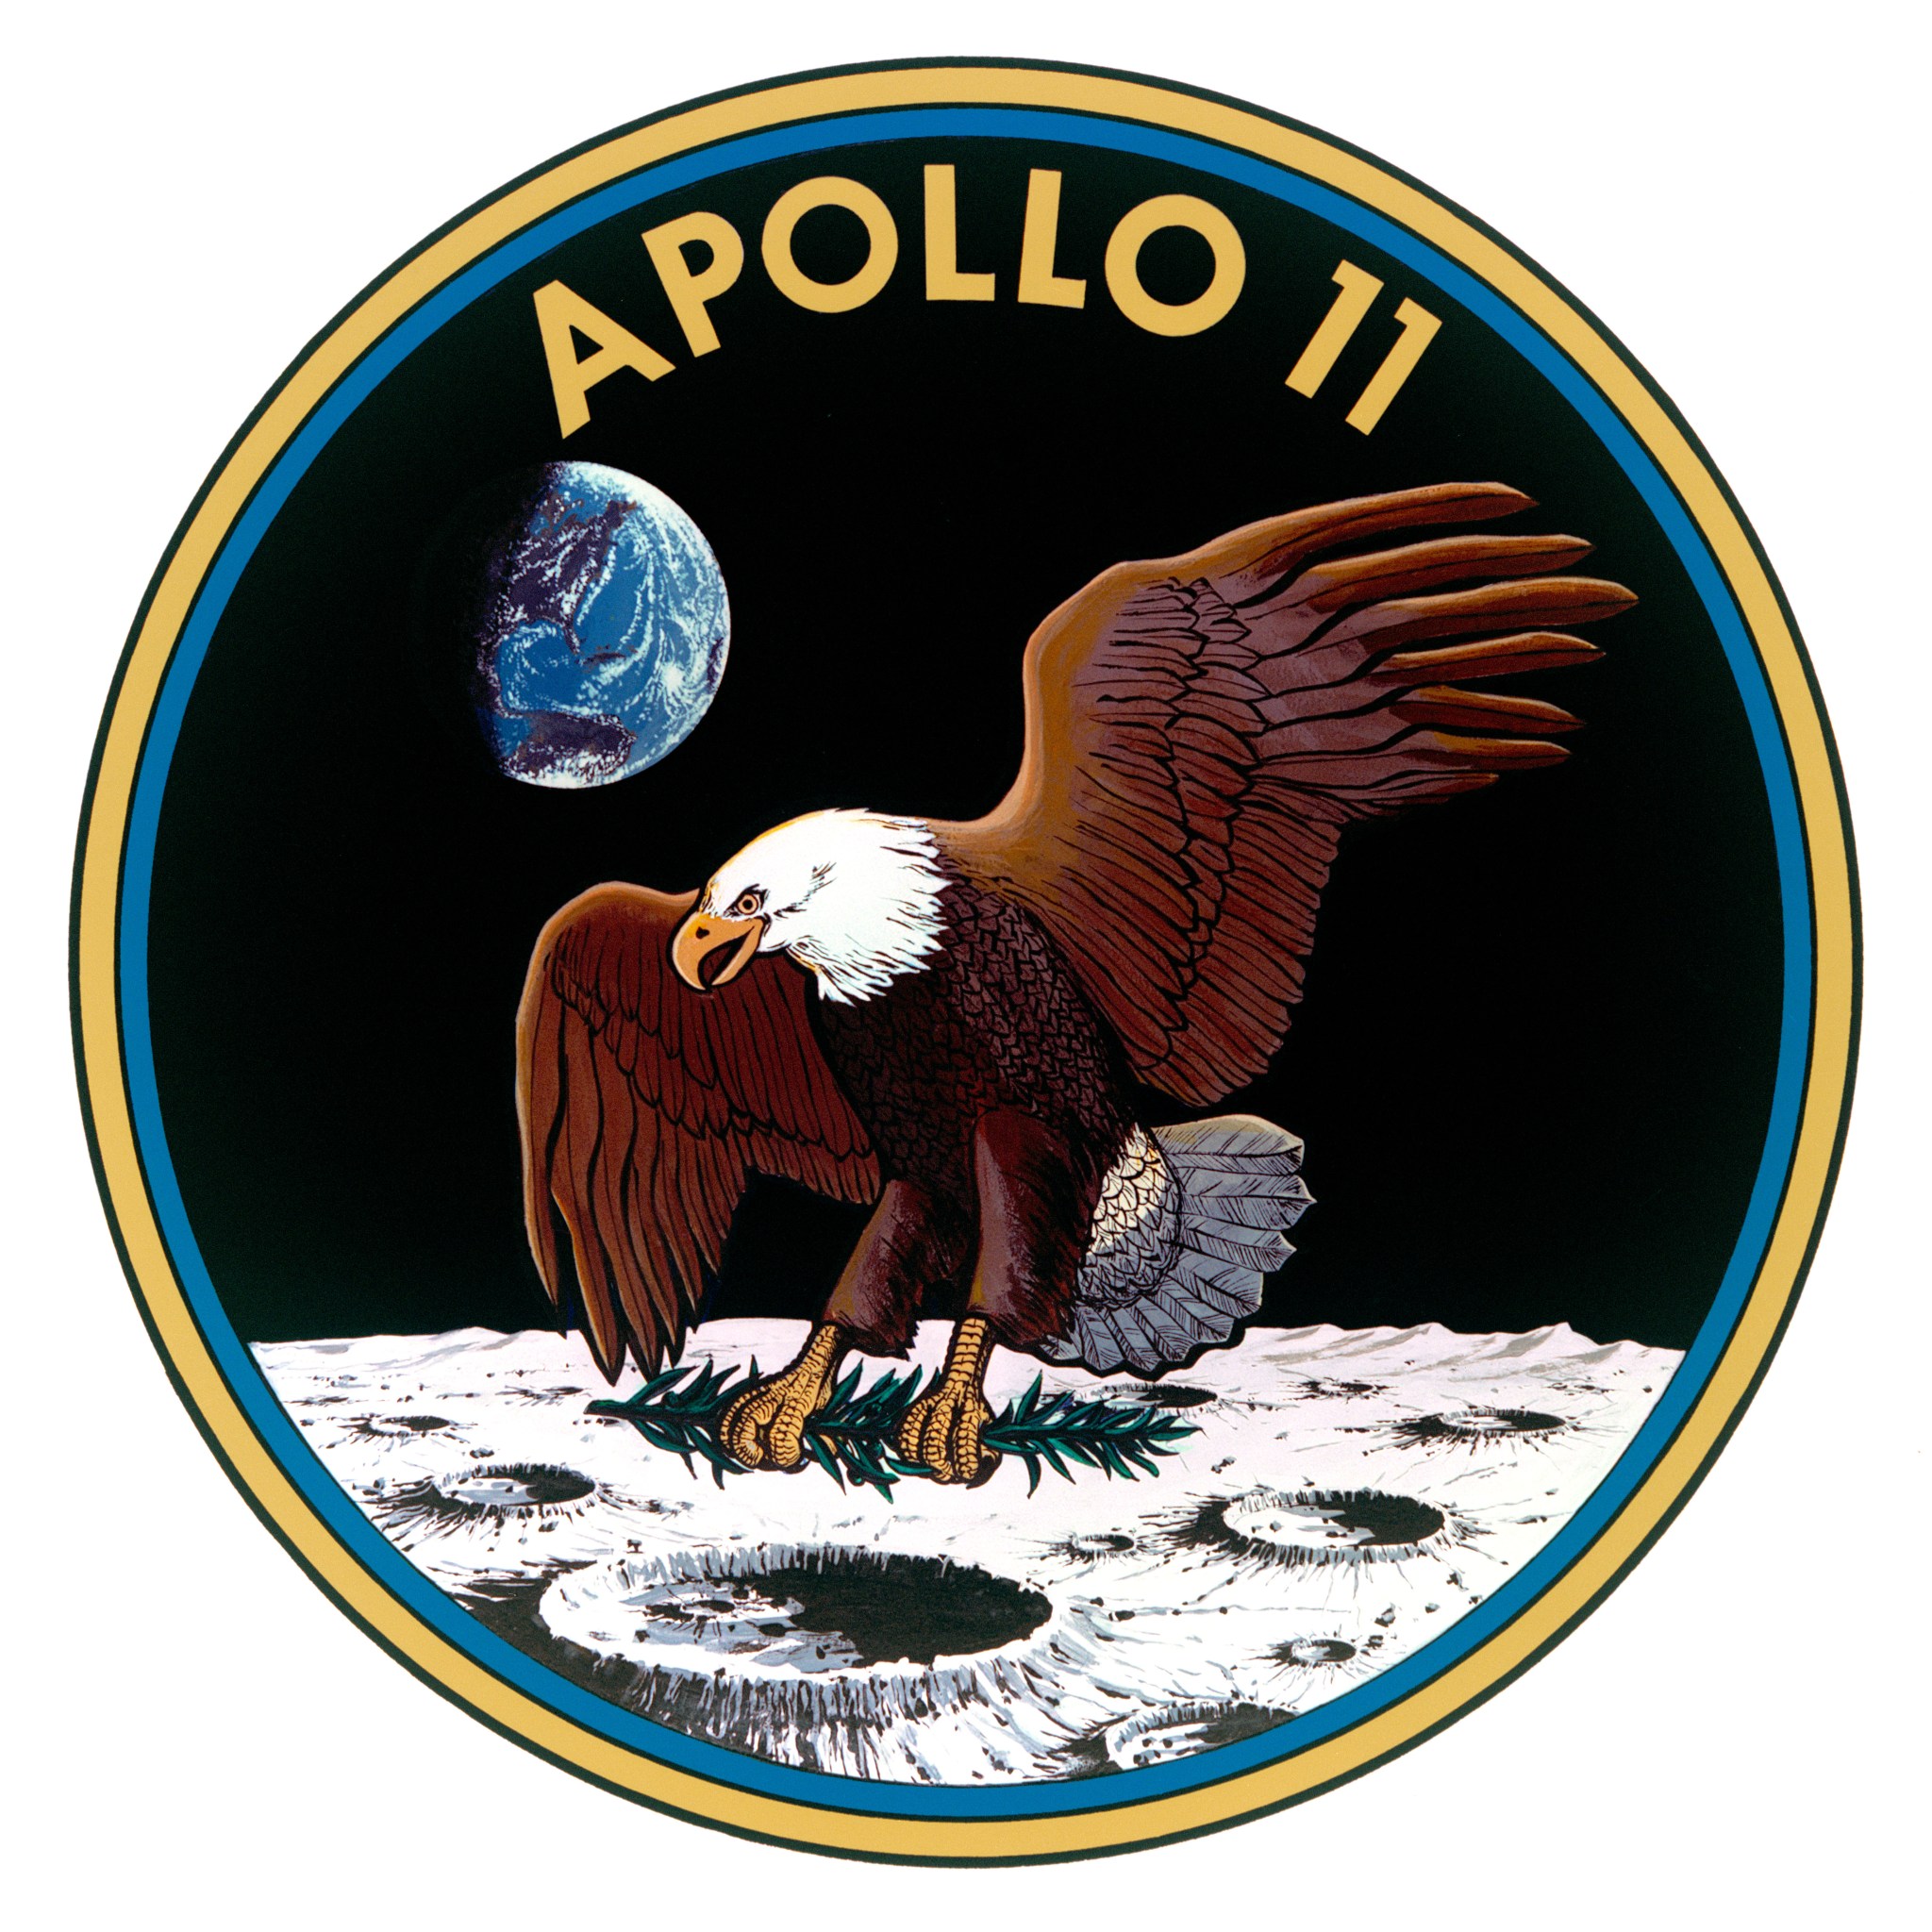 Apollo 11 crew portrait